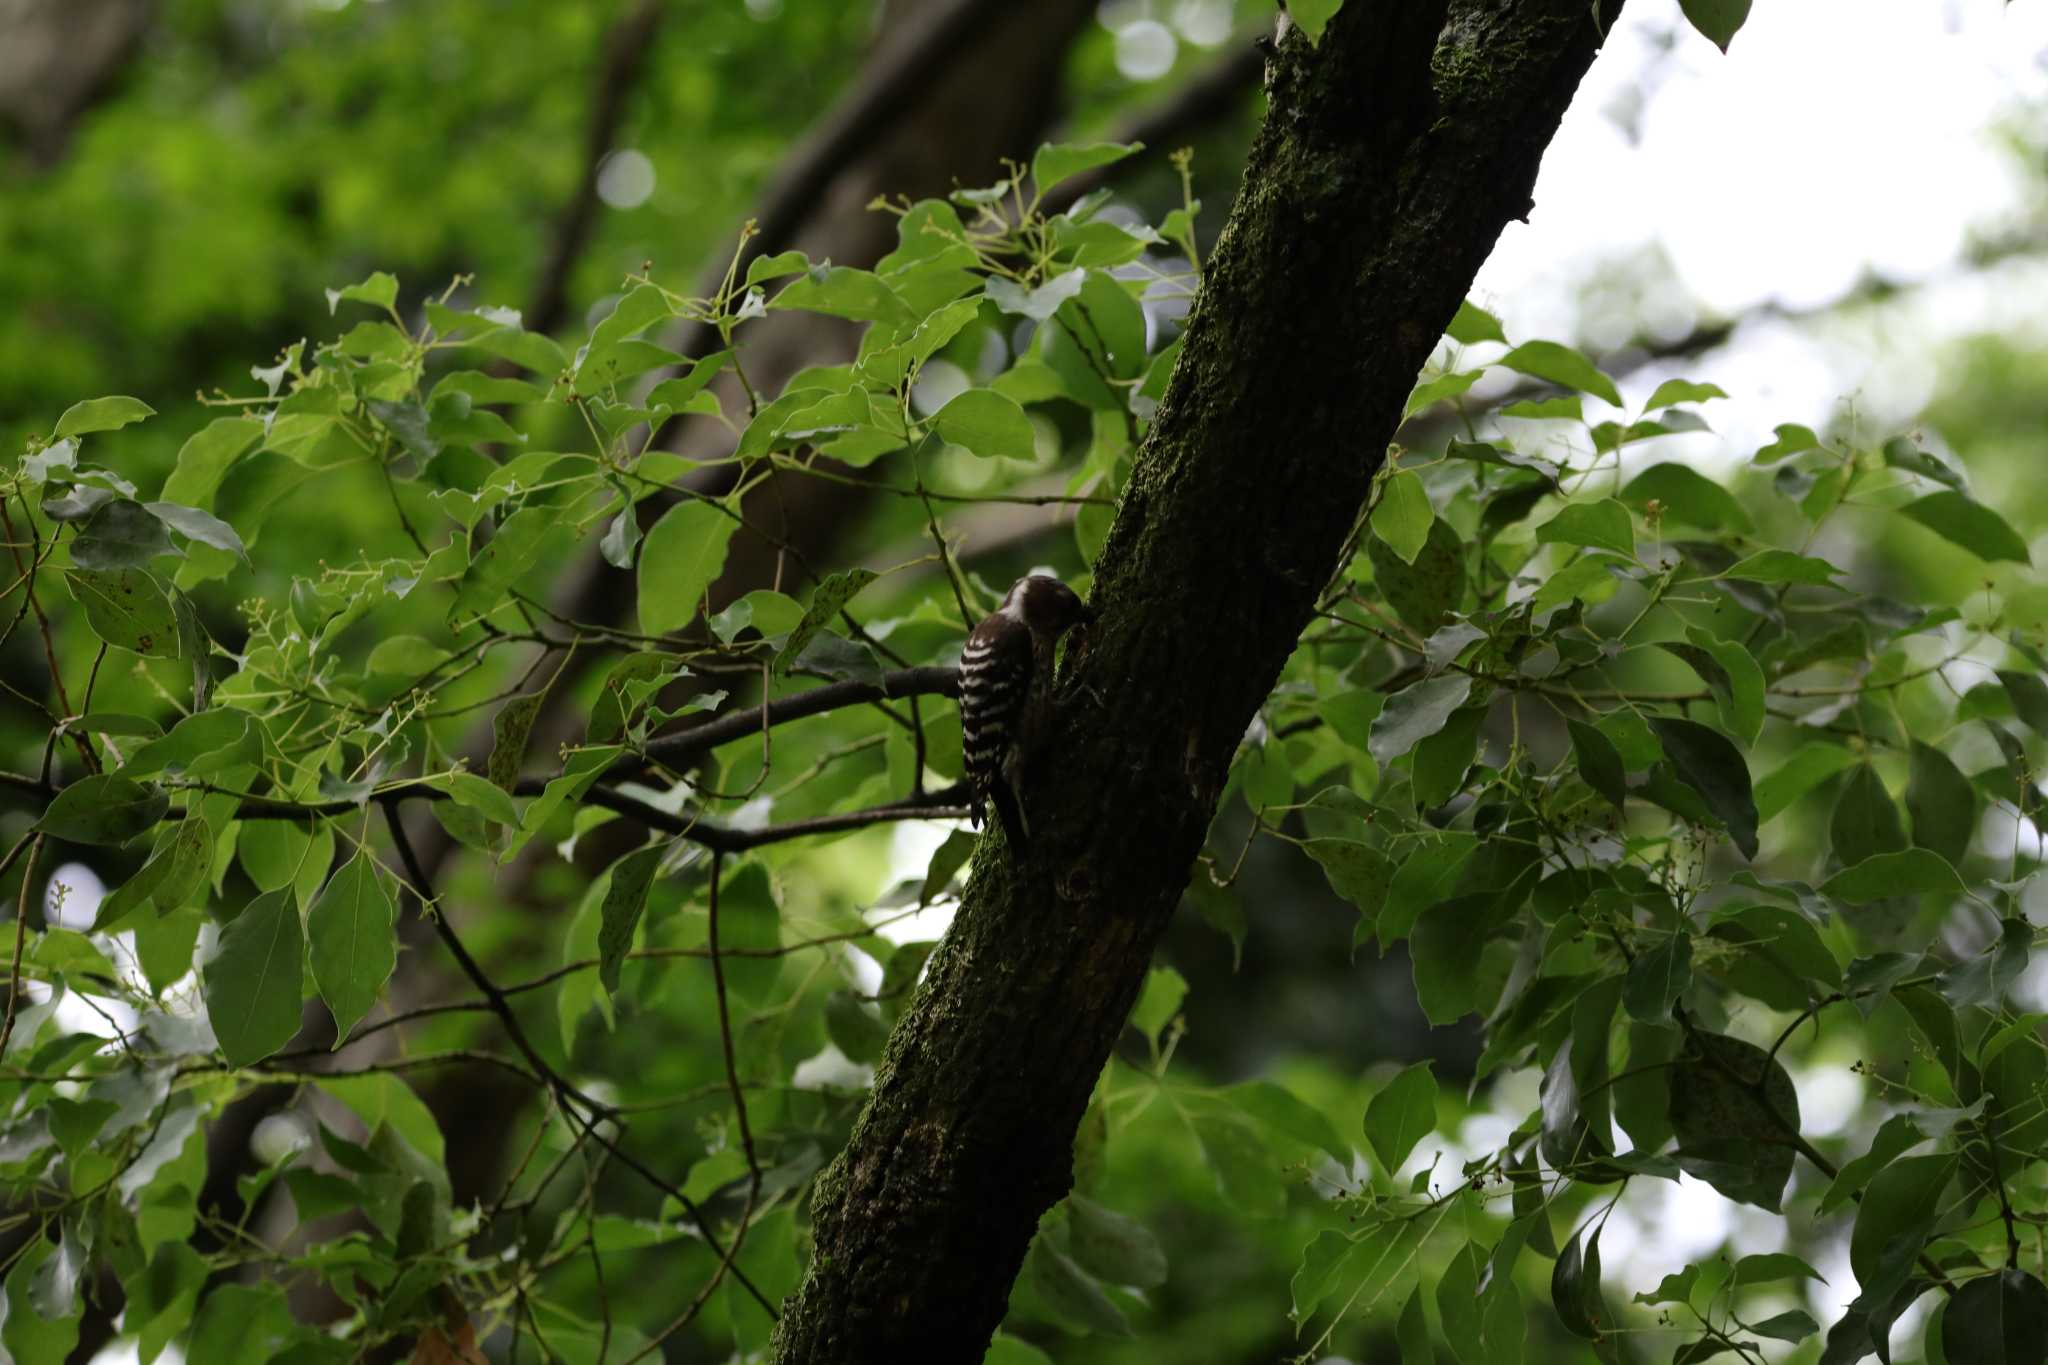 Photo of Japanese Pygmy Woodpecker at Osaka castle park by 蕾@sourai0443